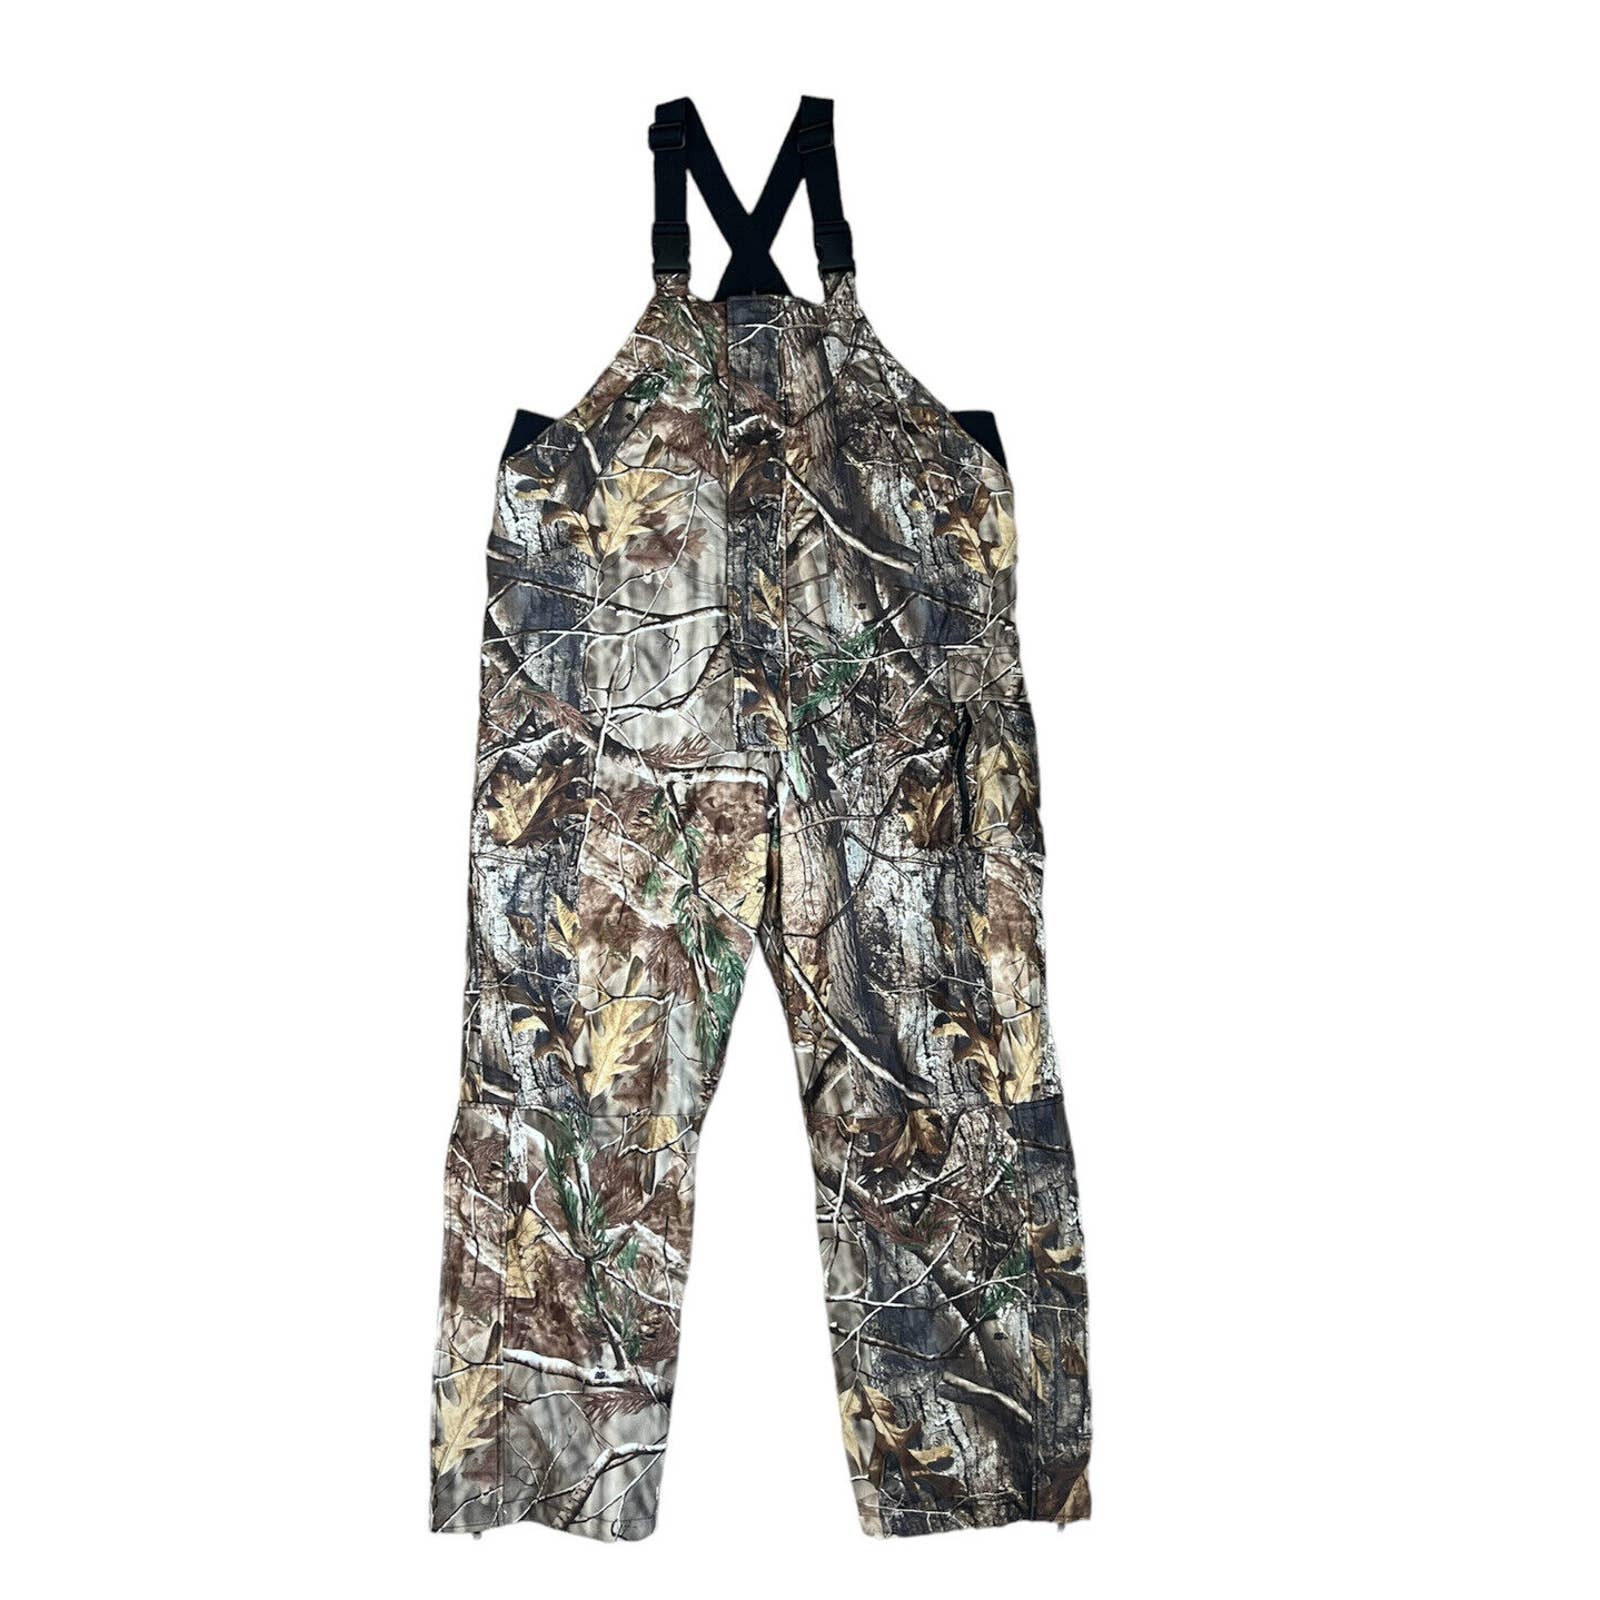 FIELD & STREAM Waterproof Hunting Bib Pants Men’s XL Realtree Camo Insulated